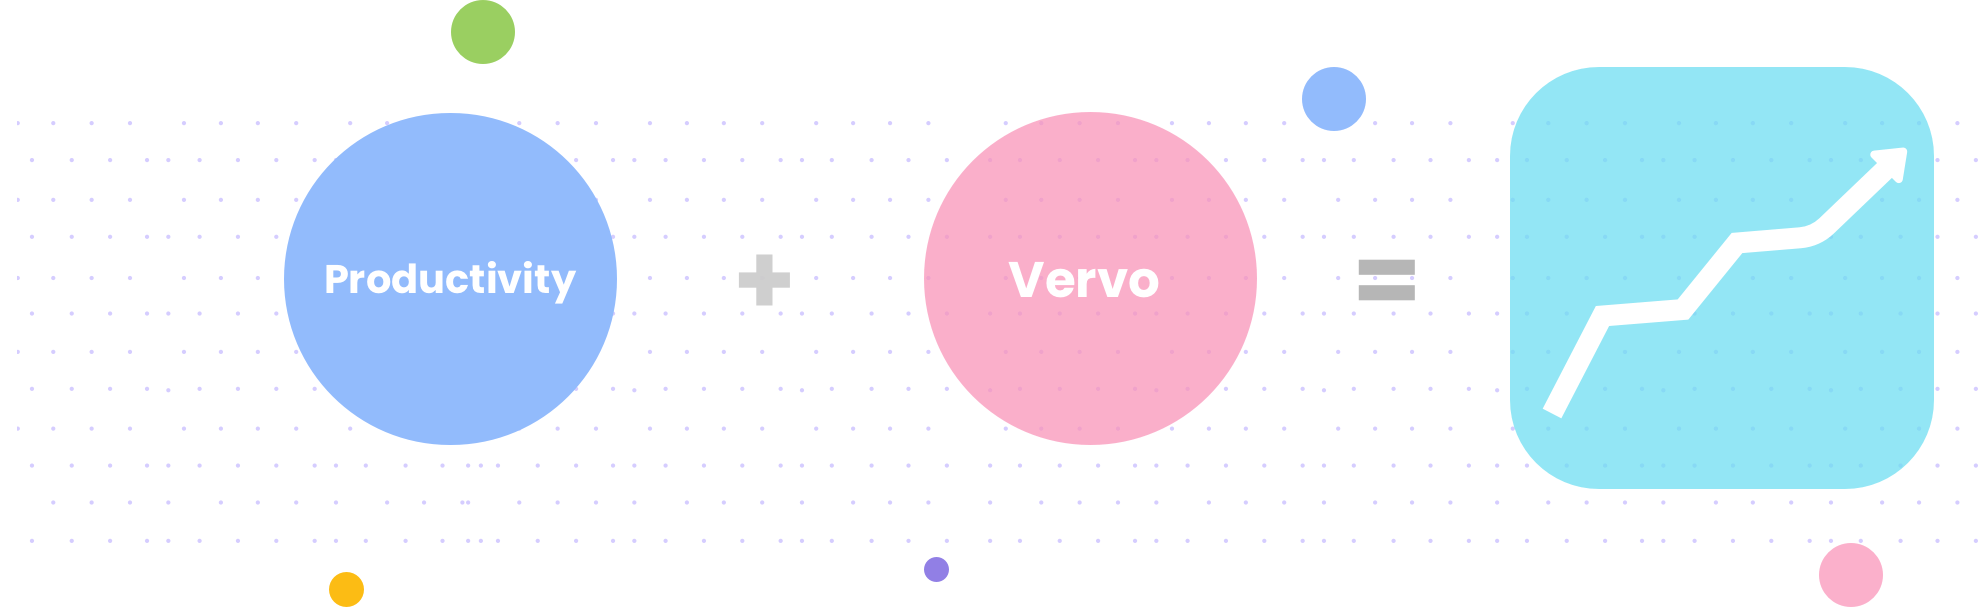 Why we built vervo app.